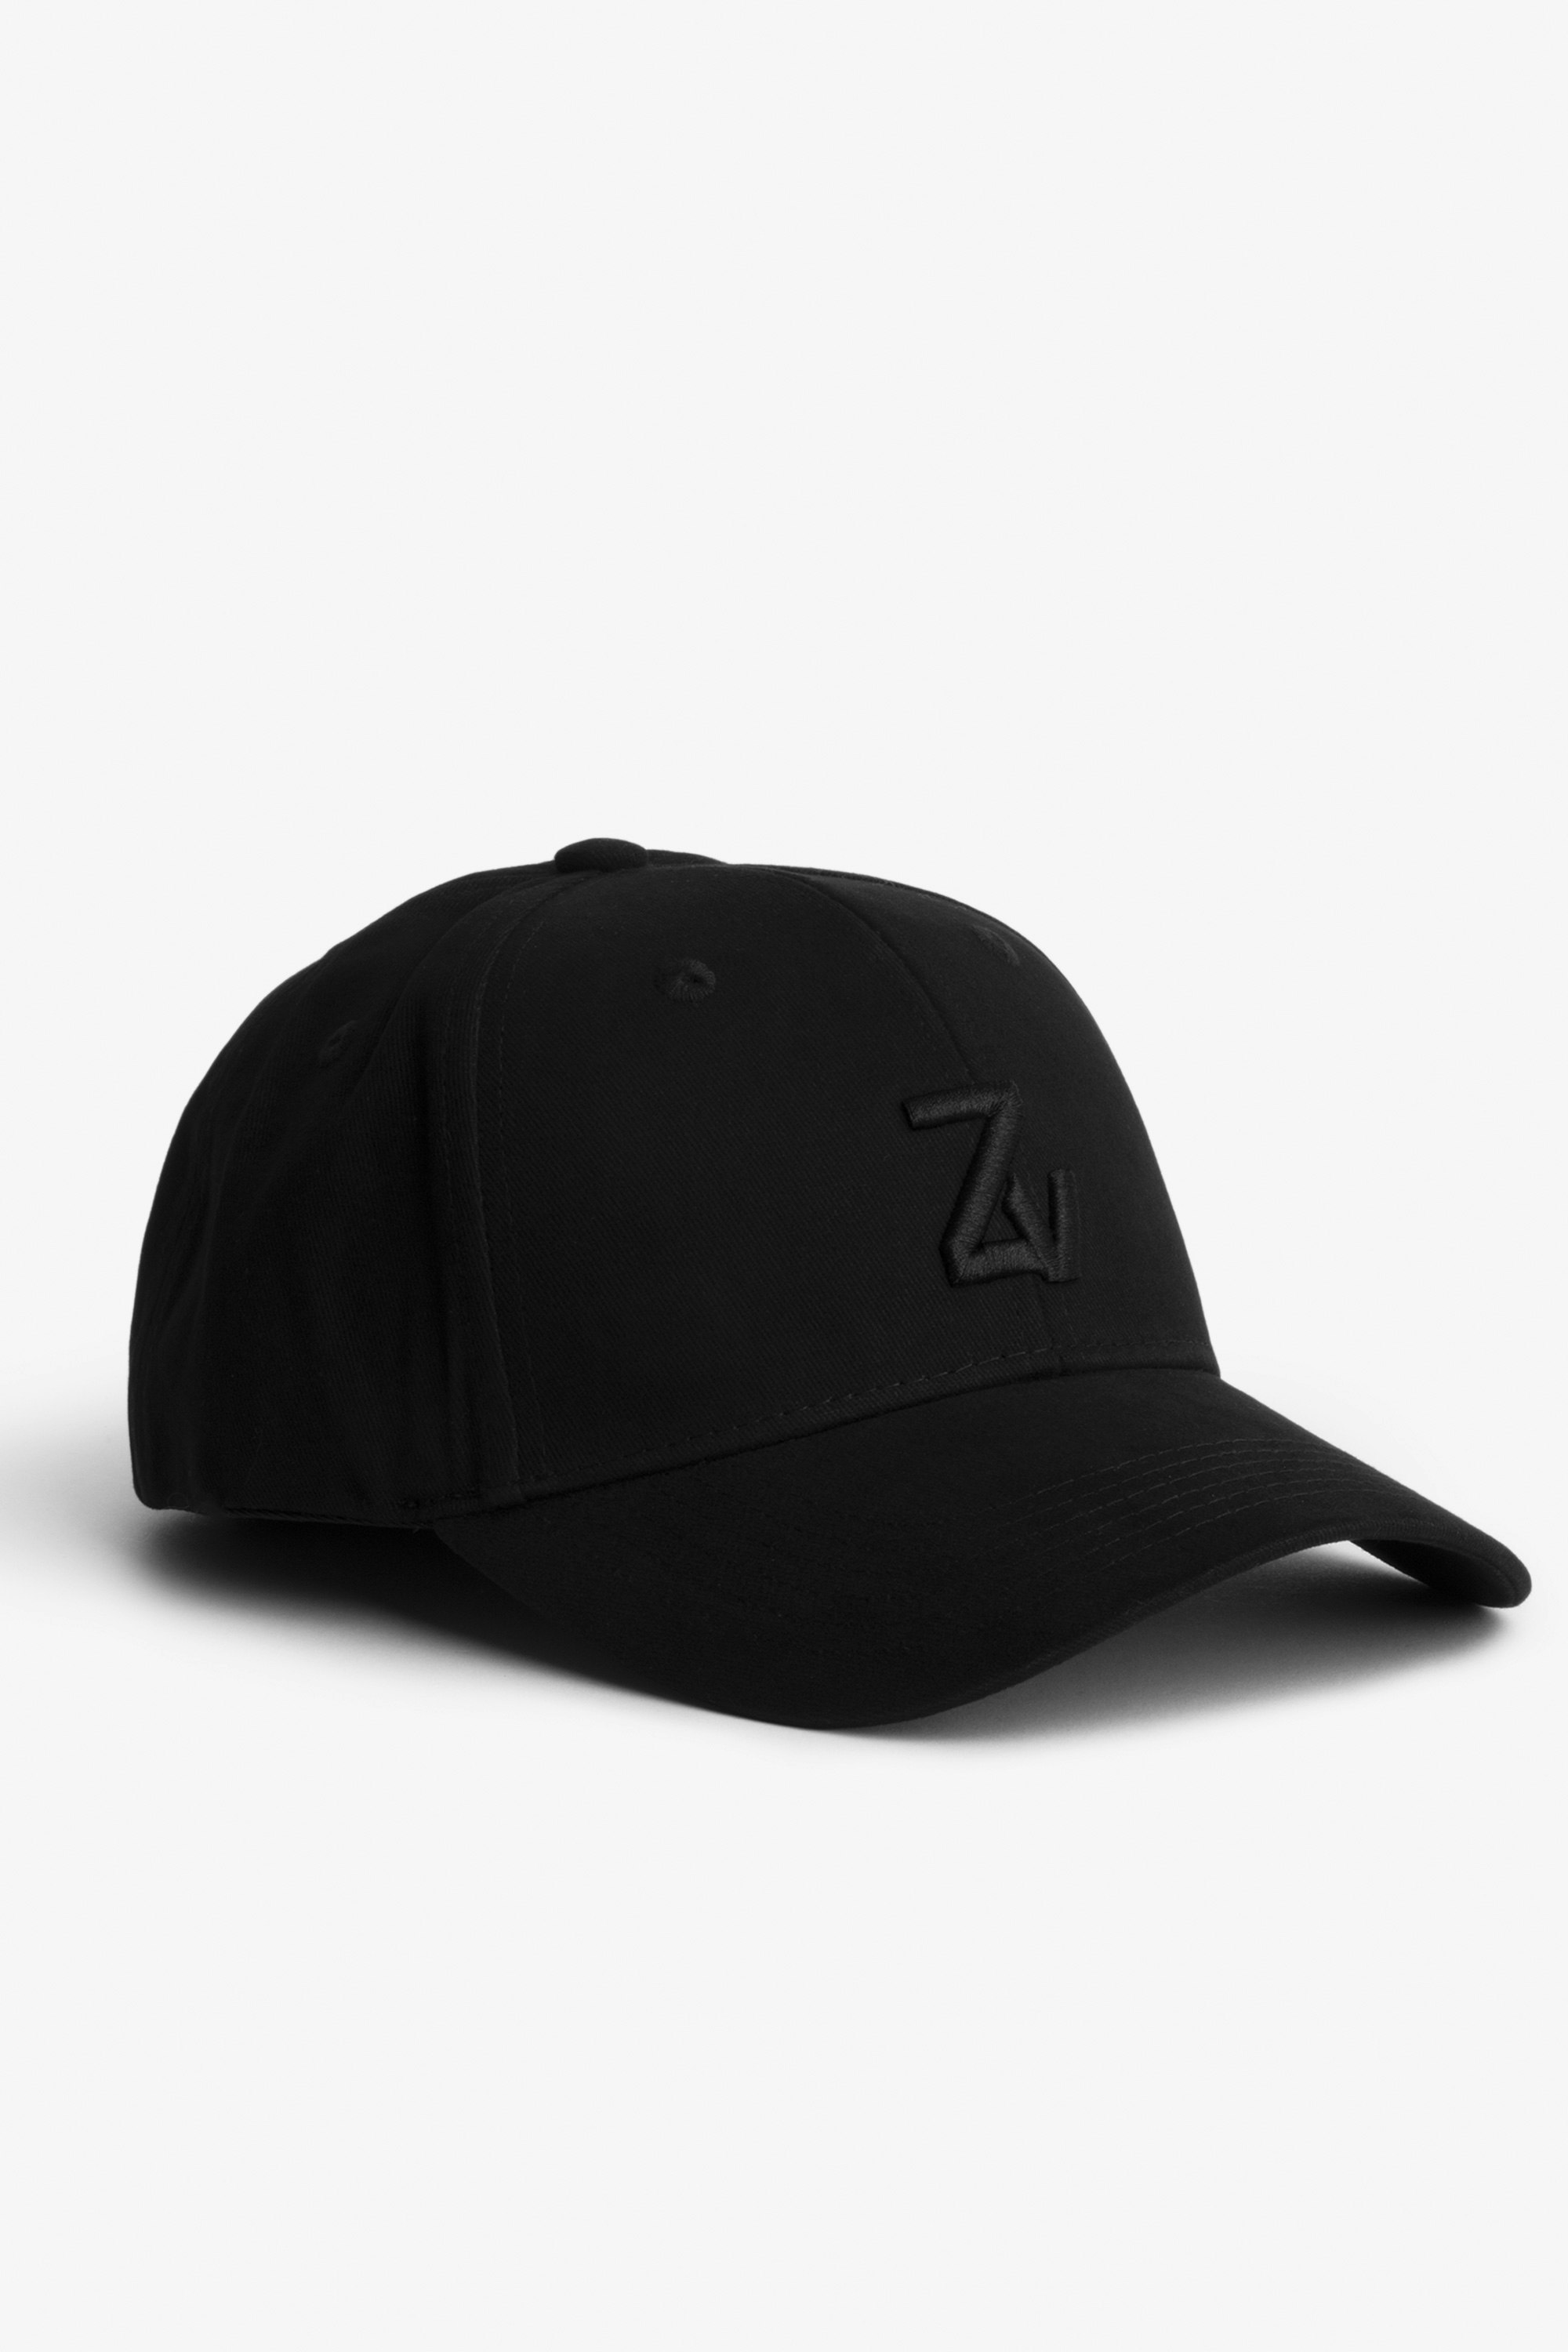 Klelia ZV Initial Cap - Women’s black cap